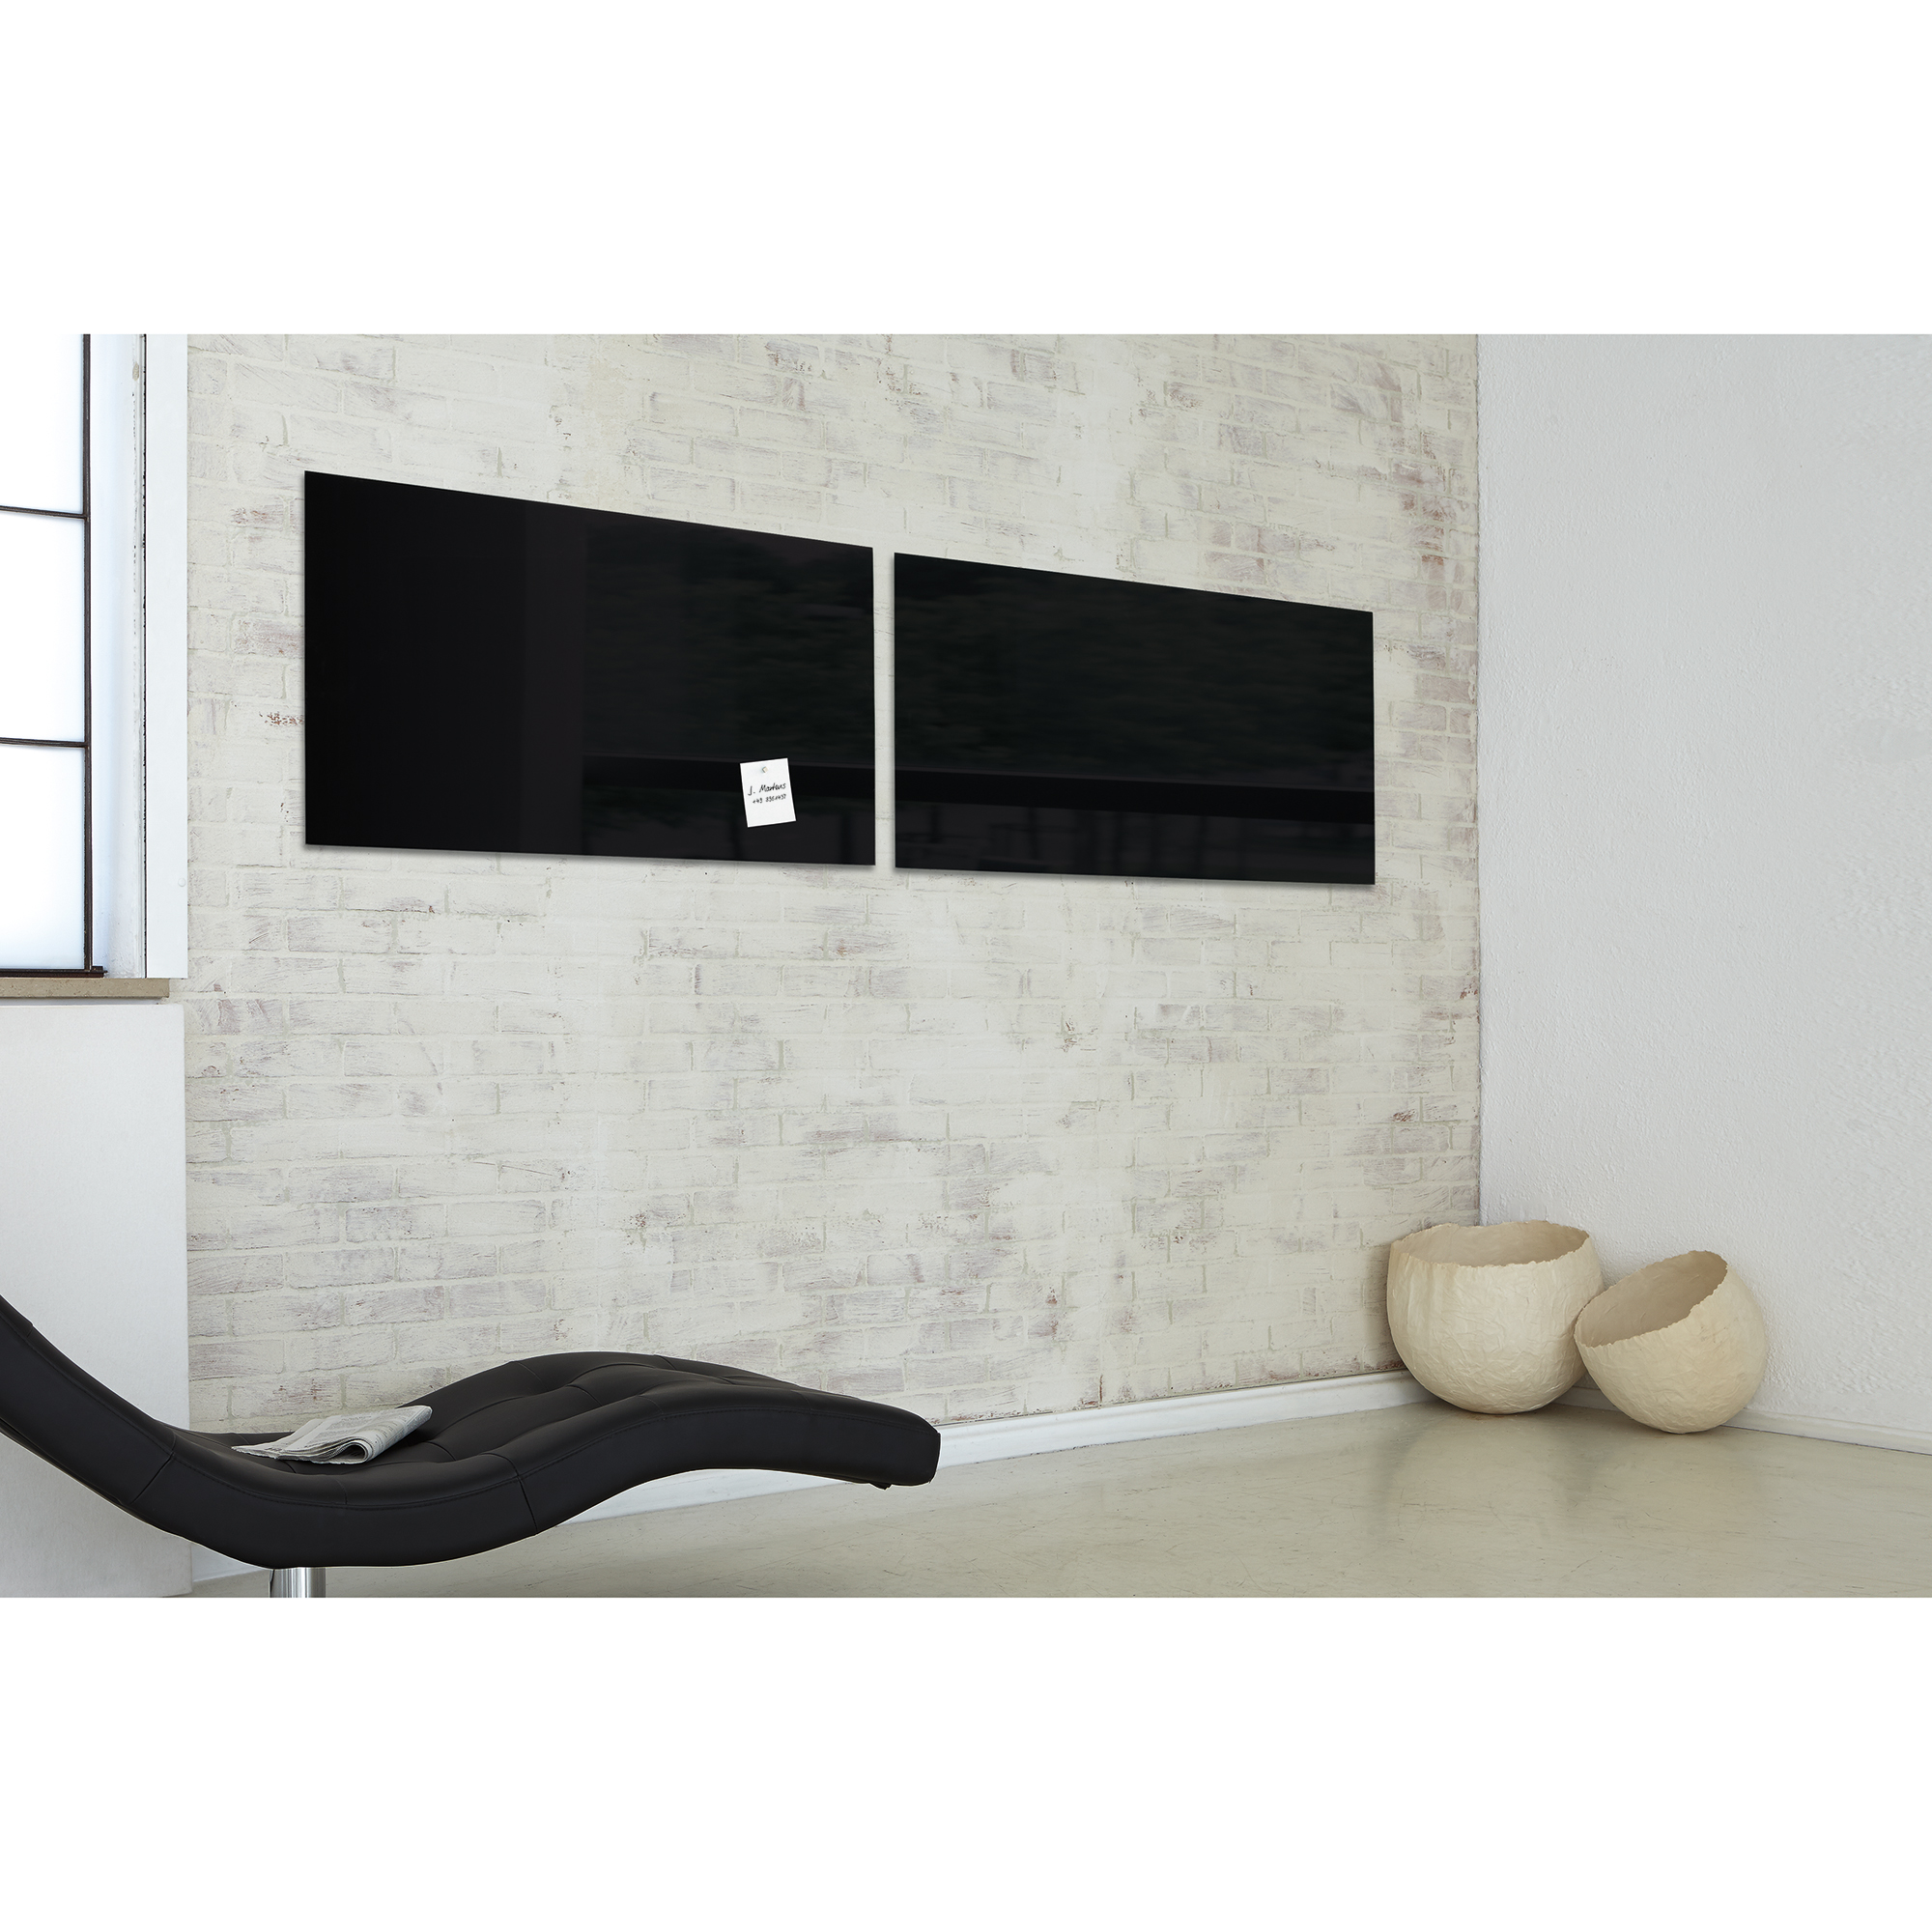 SIGEL Glasboard artverum® 91 x 46 cm schwarz